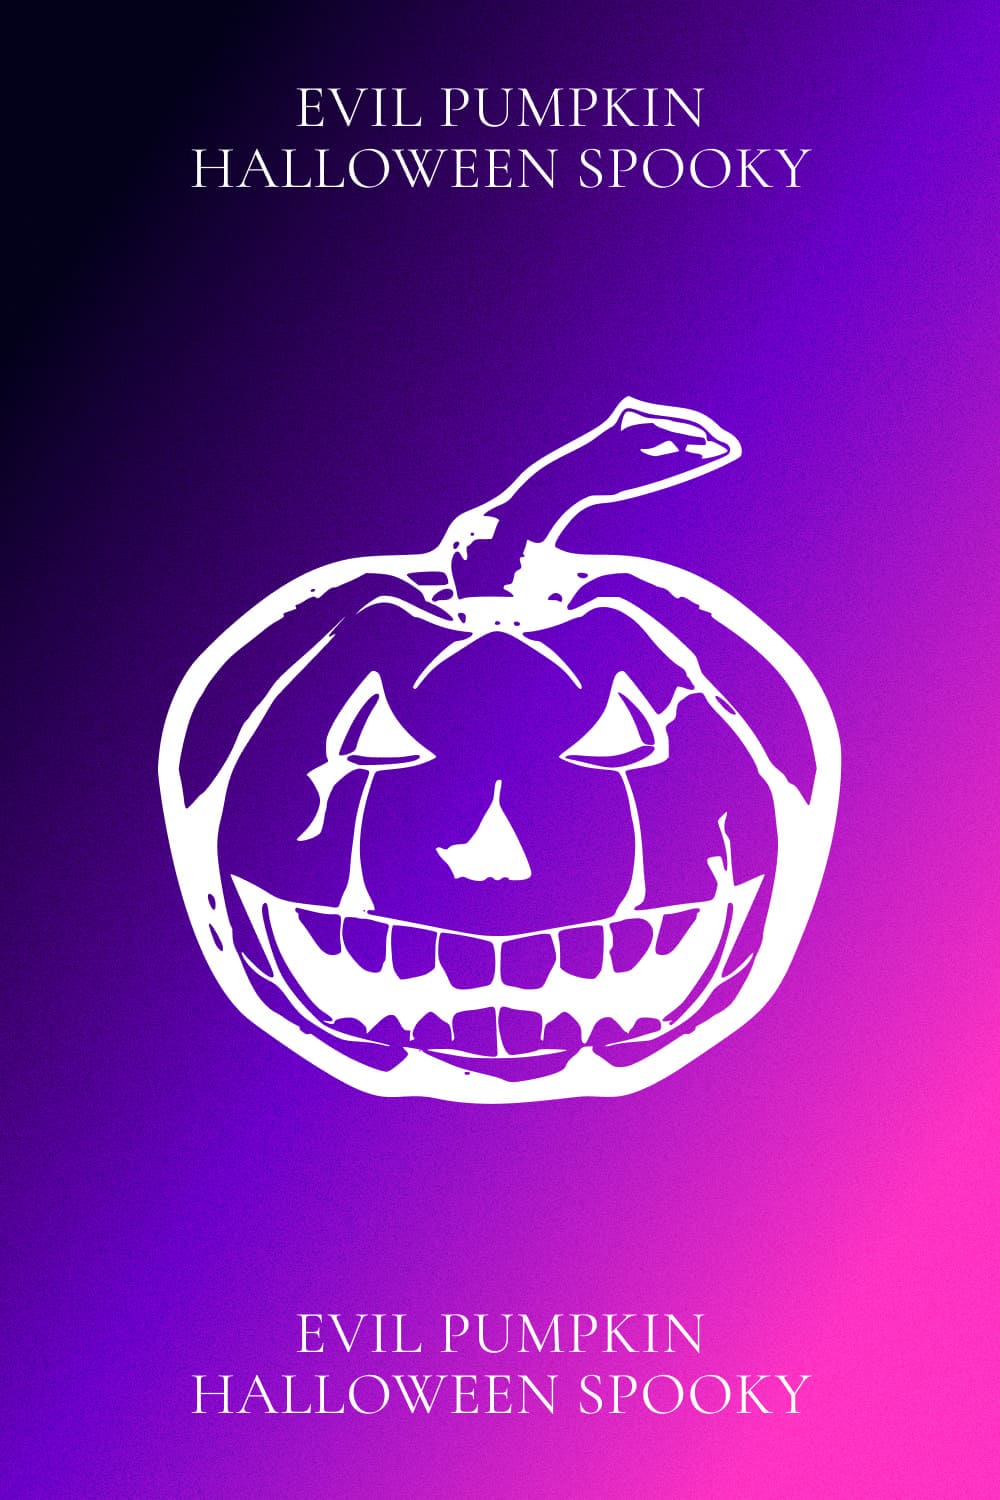 Evil Pumpkin Halloween Spooky - Pinterest Image.